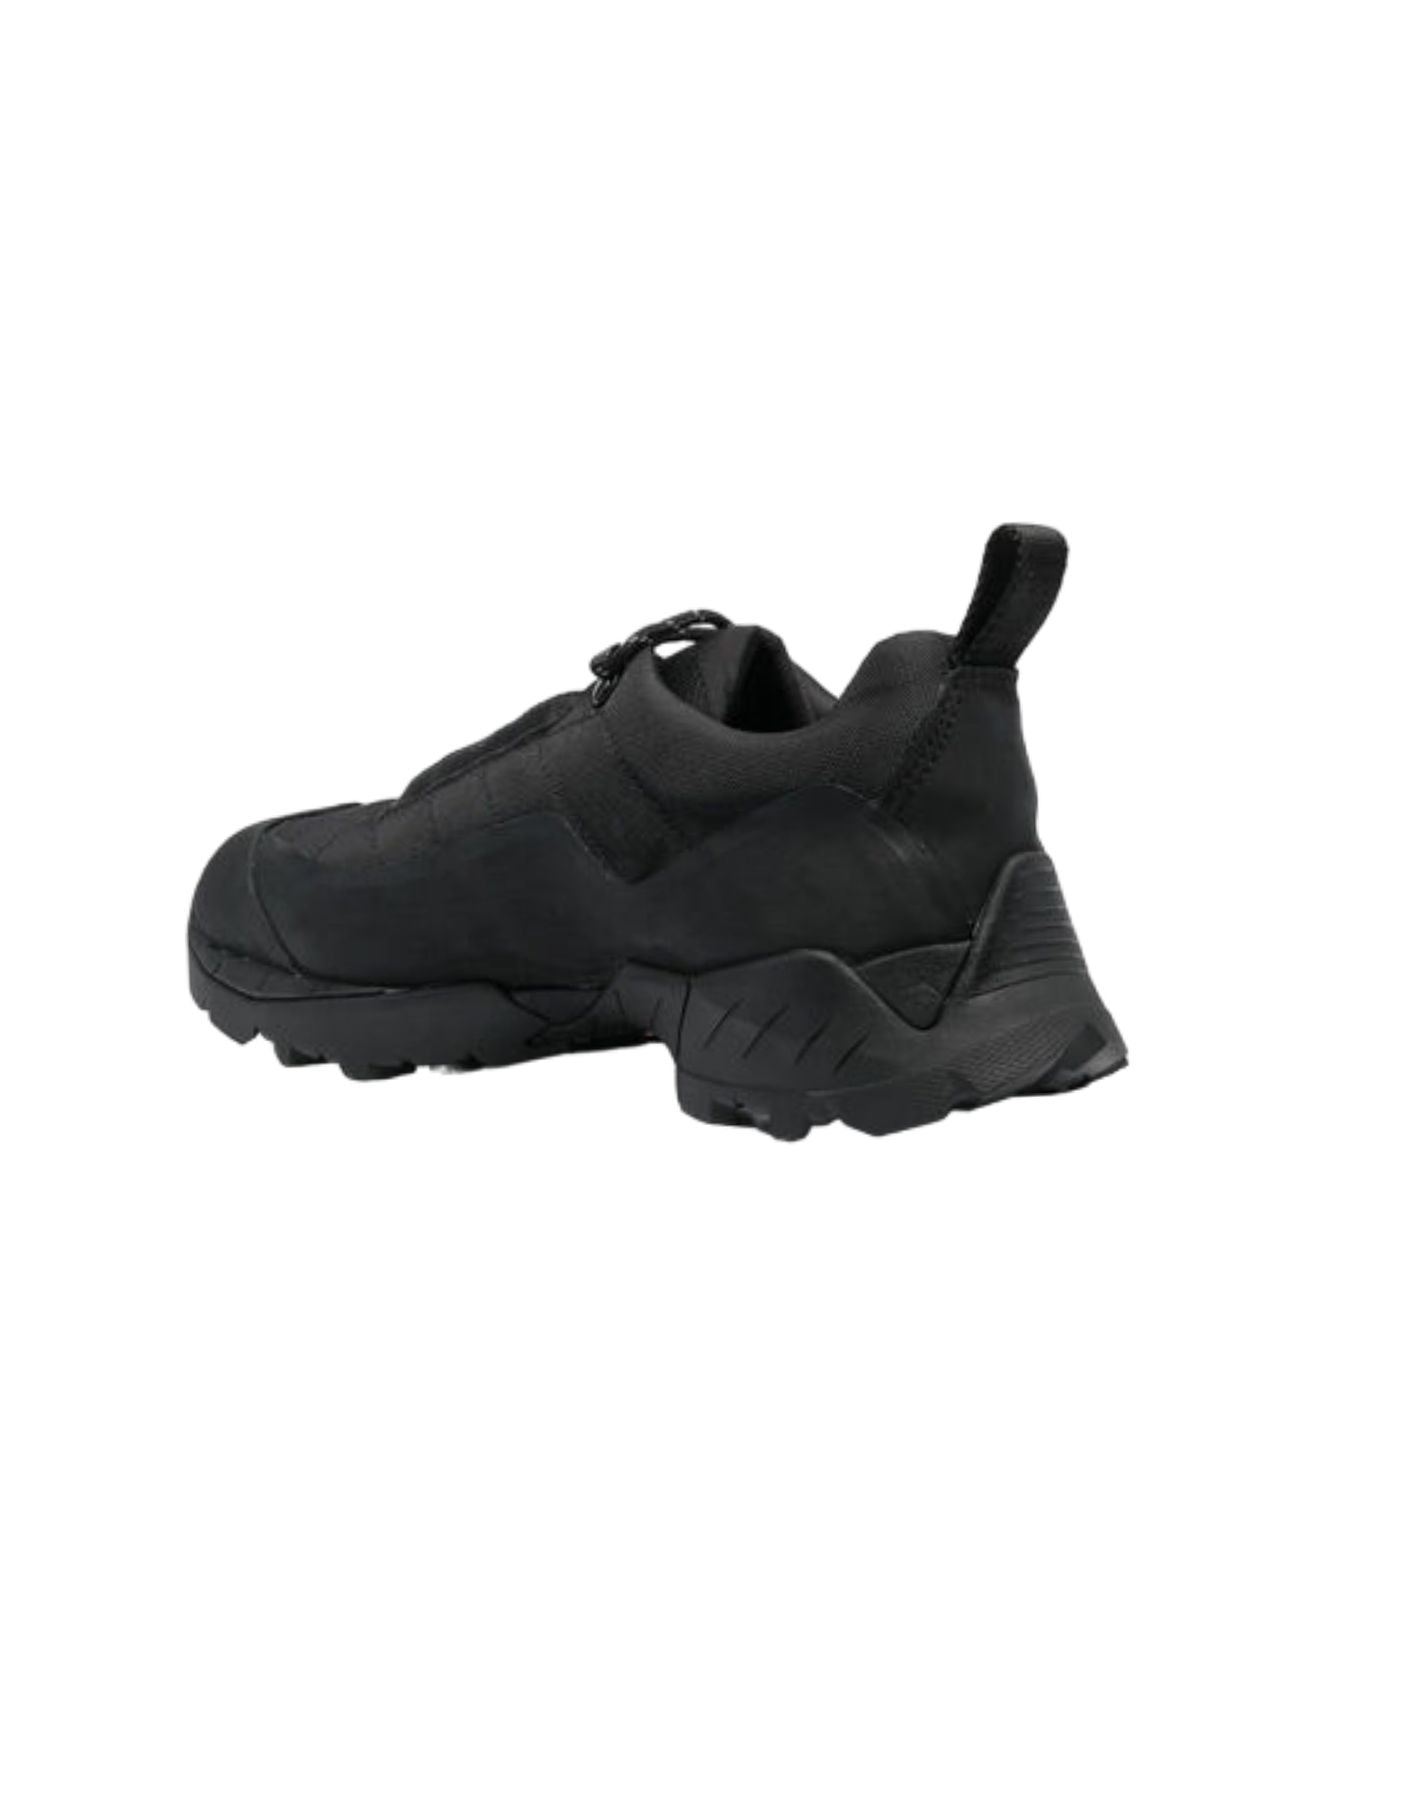 Chaussures man kfa10 001 Black Roa